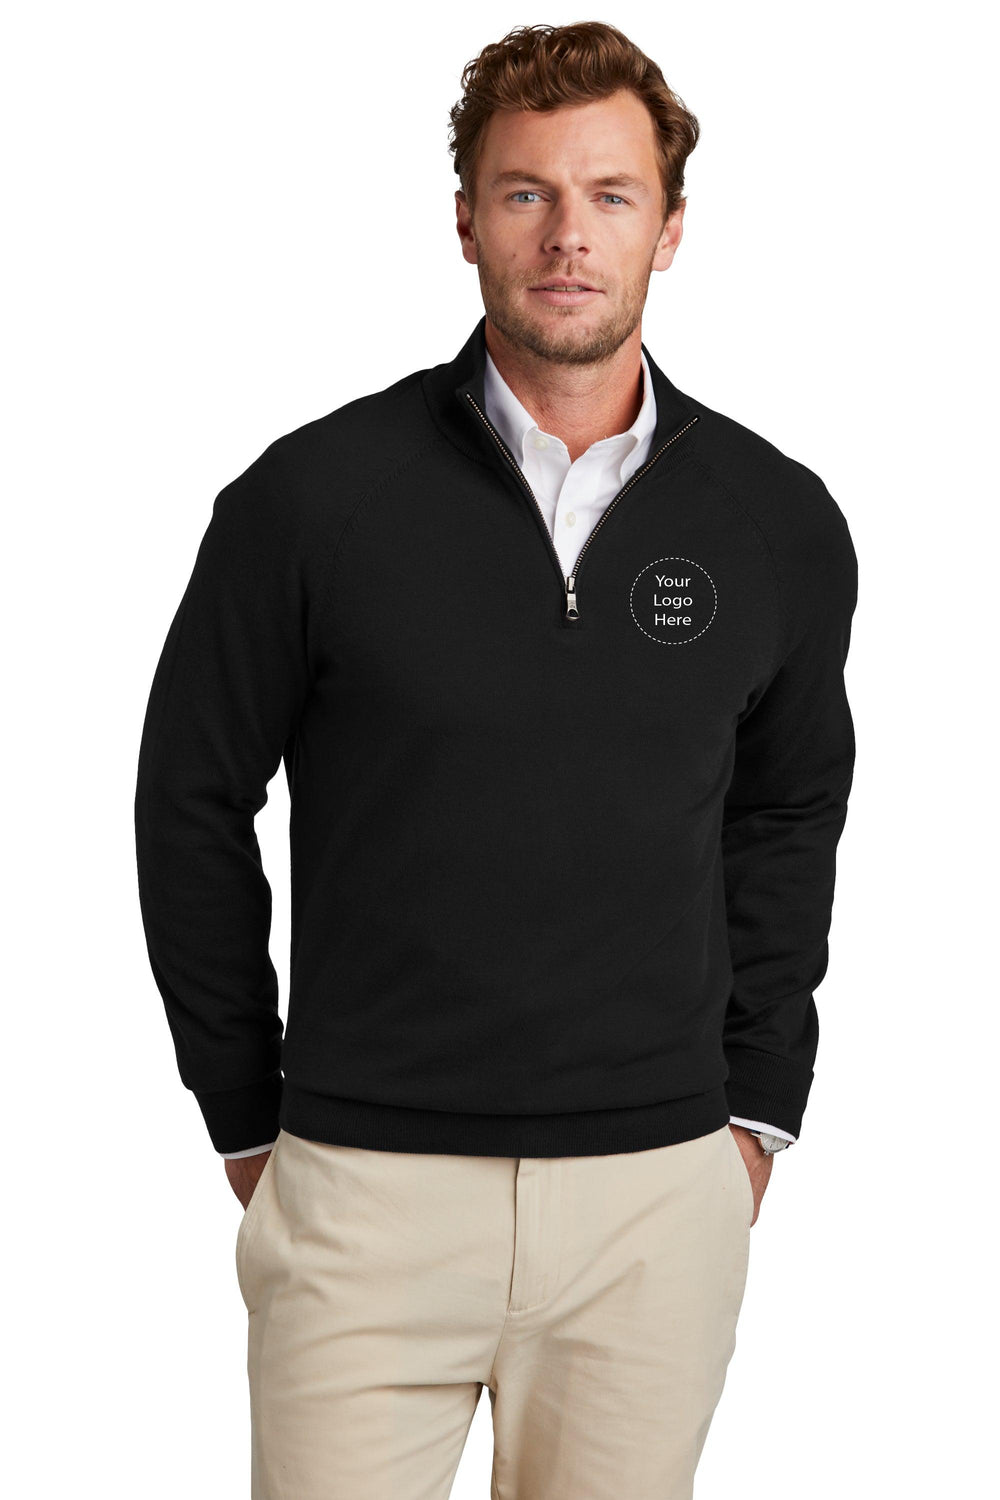 Keller Williams NEW KW-BB18402 Brooks Brothers® Men's Cotton Stretch 1/4-Zip Sweater 